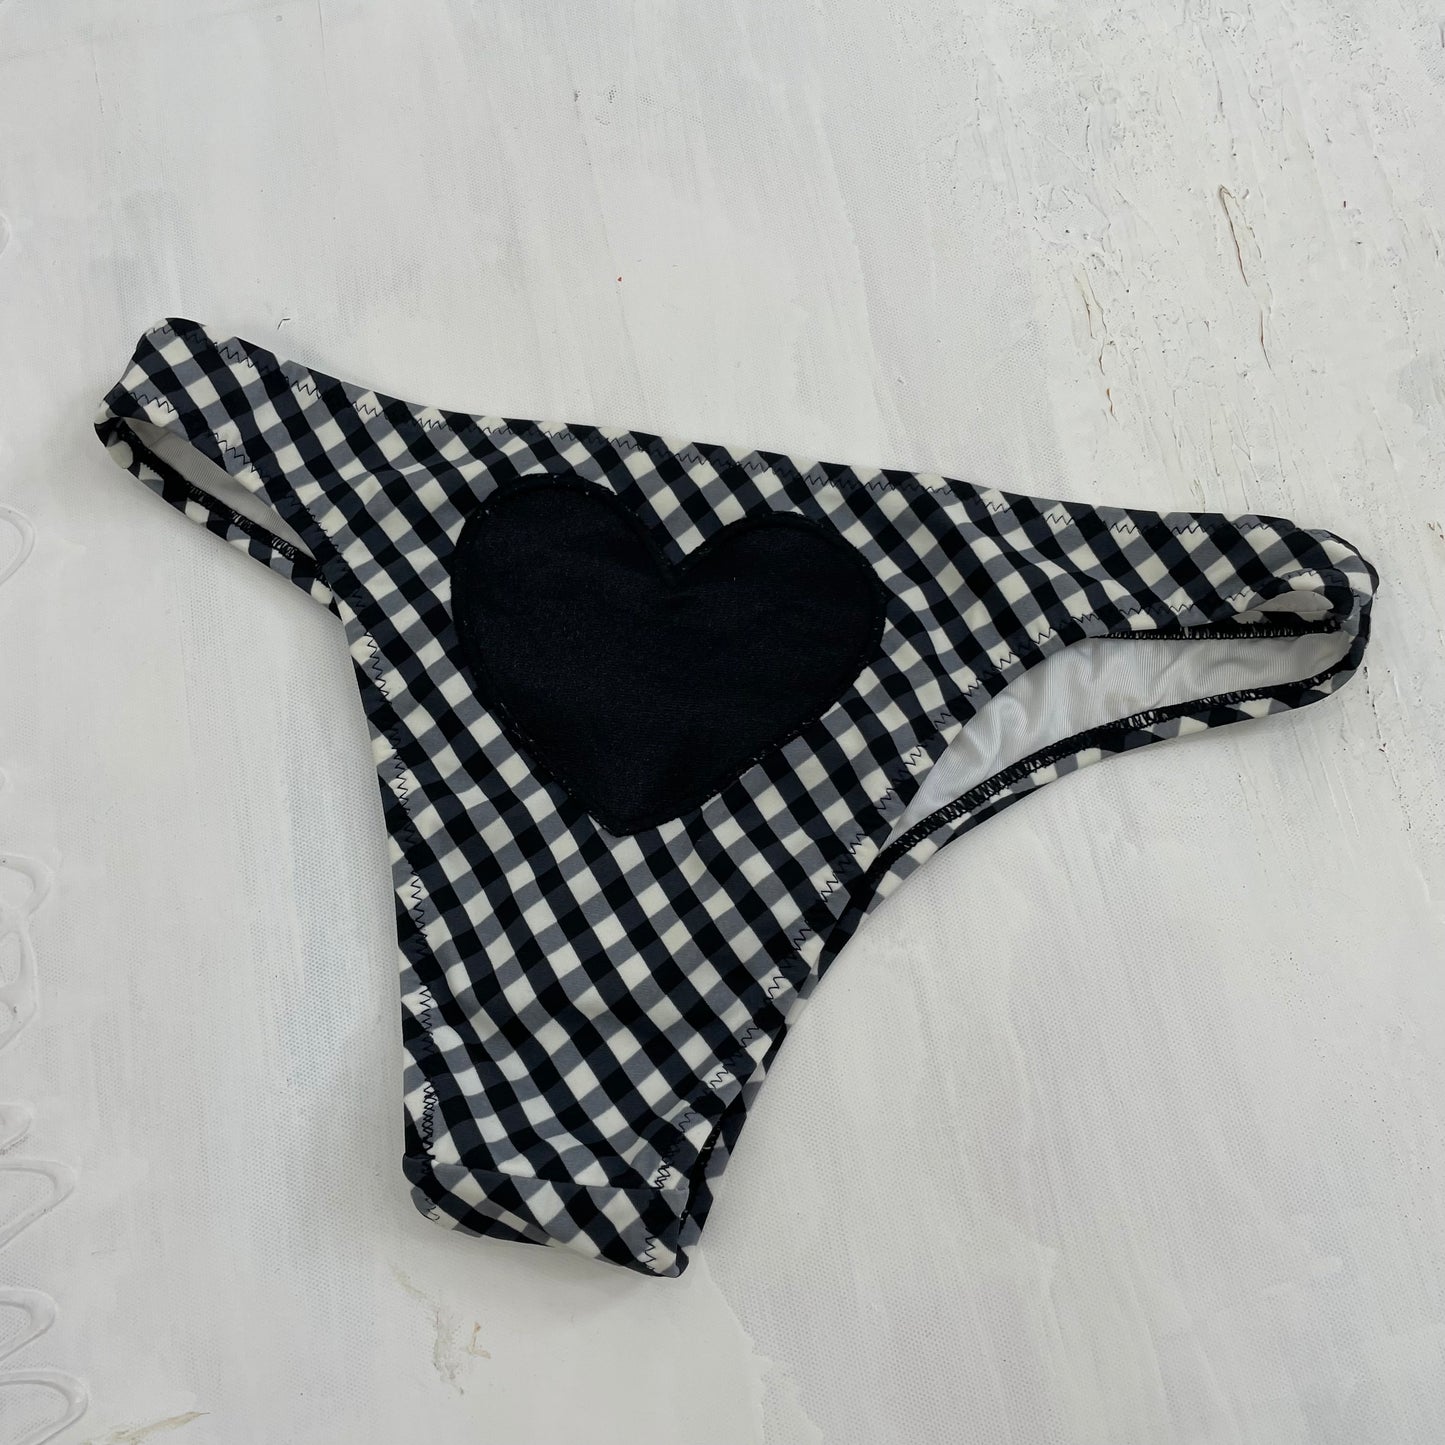 AMELIA GRAY DROP | small black & white gingham bikini bottoms